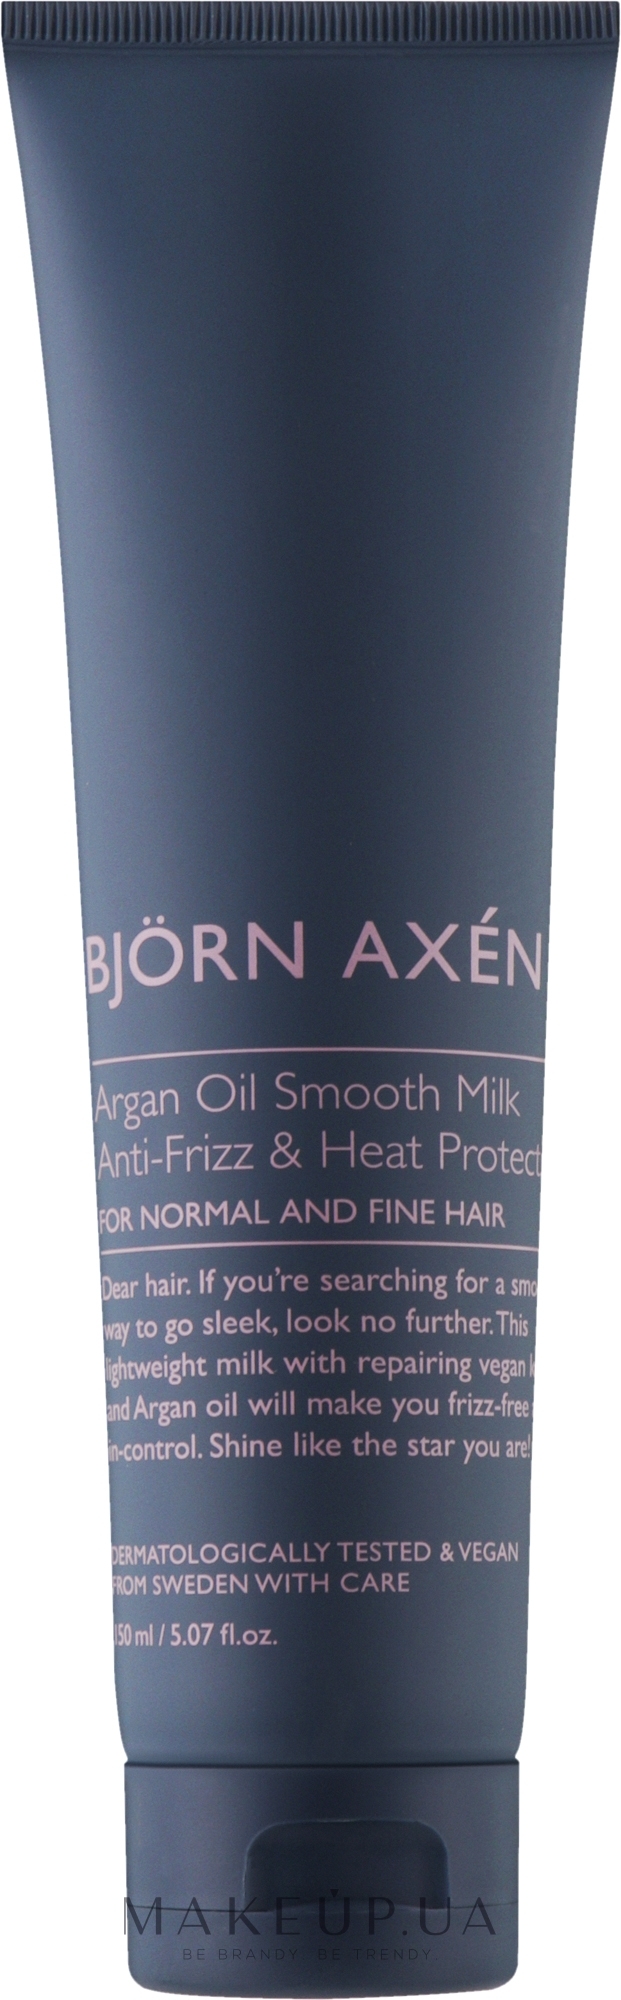 Крем-молочко для укладки волос - BjOrn AxEn Argan Oil Smooth Milk — фото 150ml